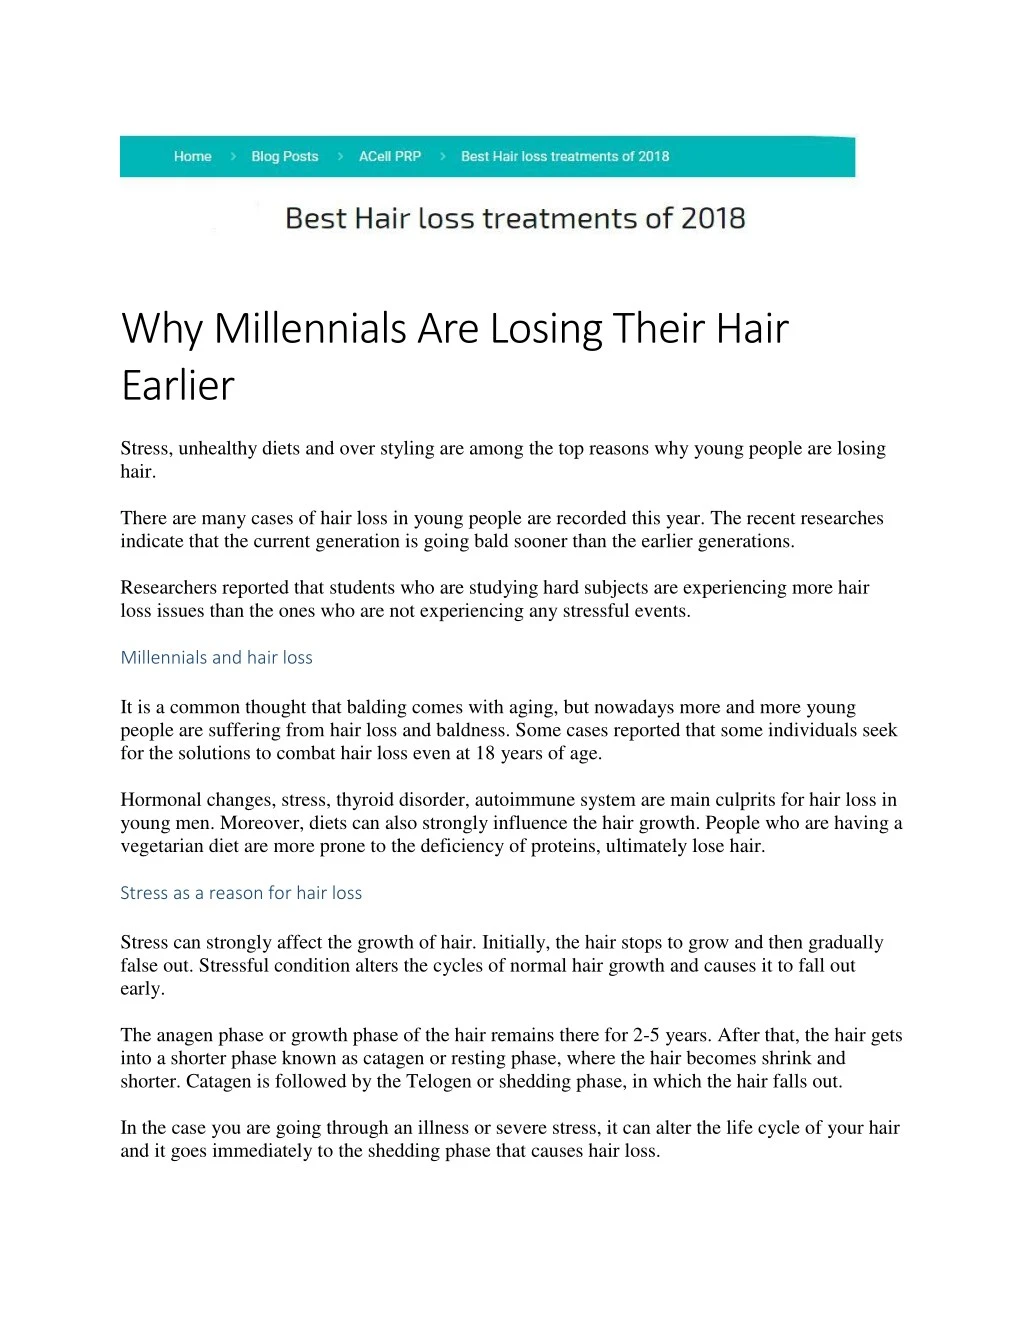 why millennials are losing their hair earlier